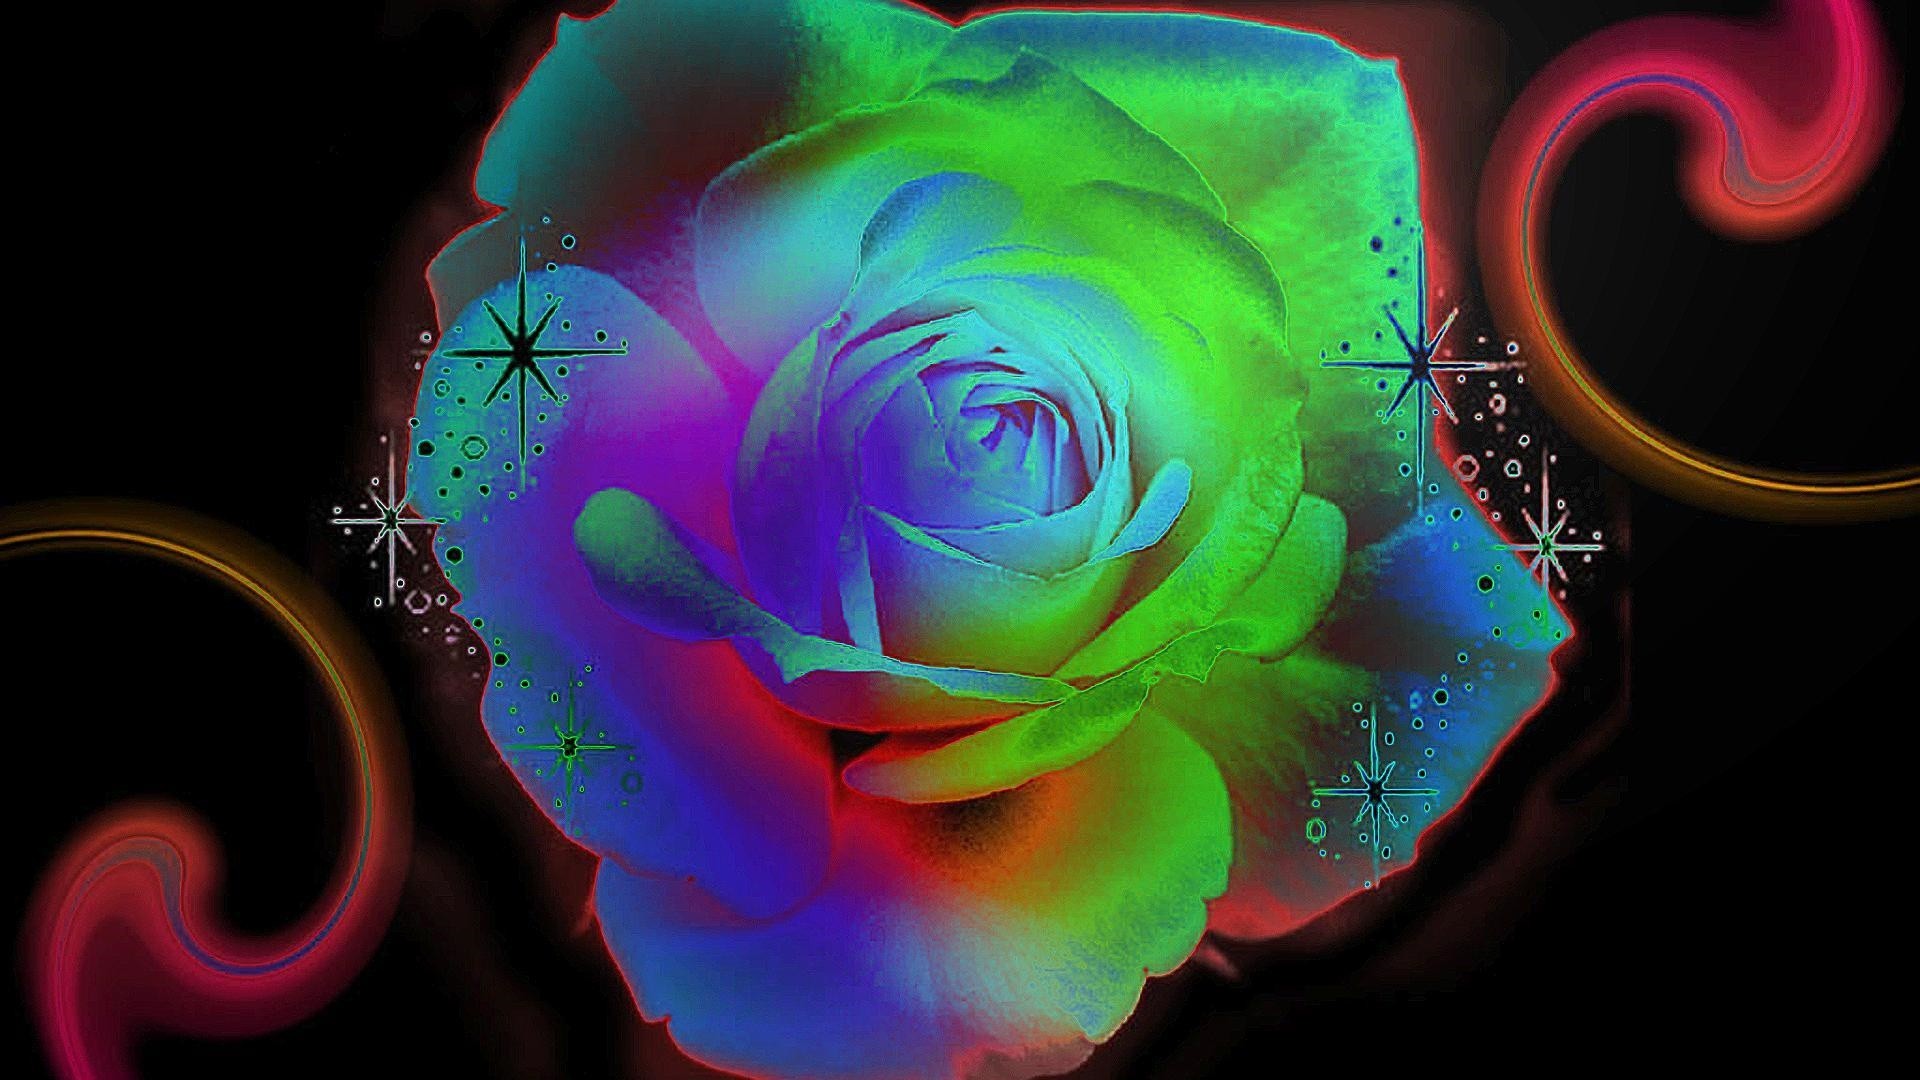 1920x1080 Bright roses roses) via www.